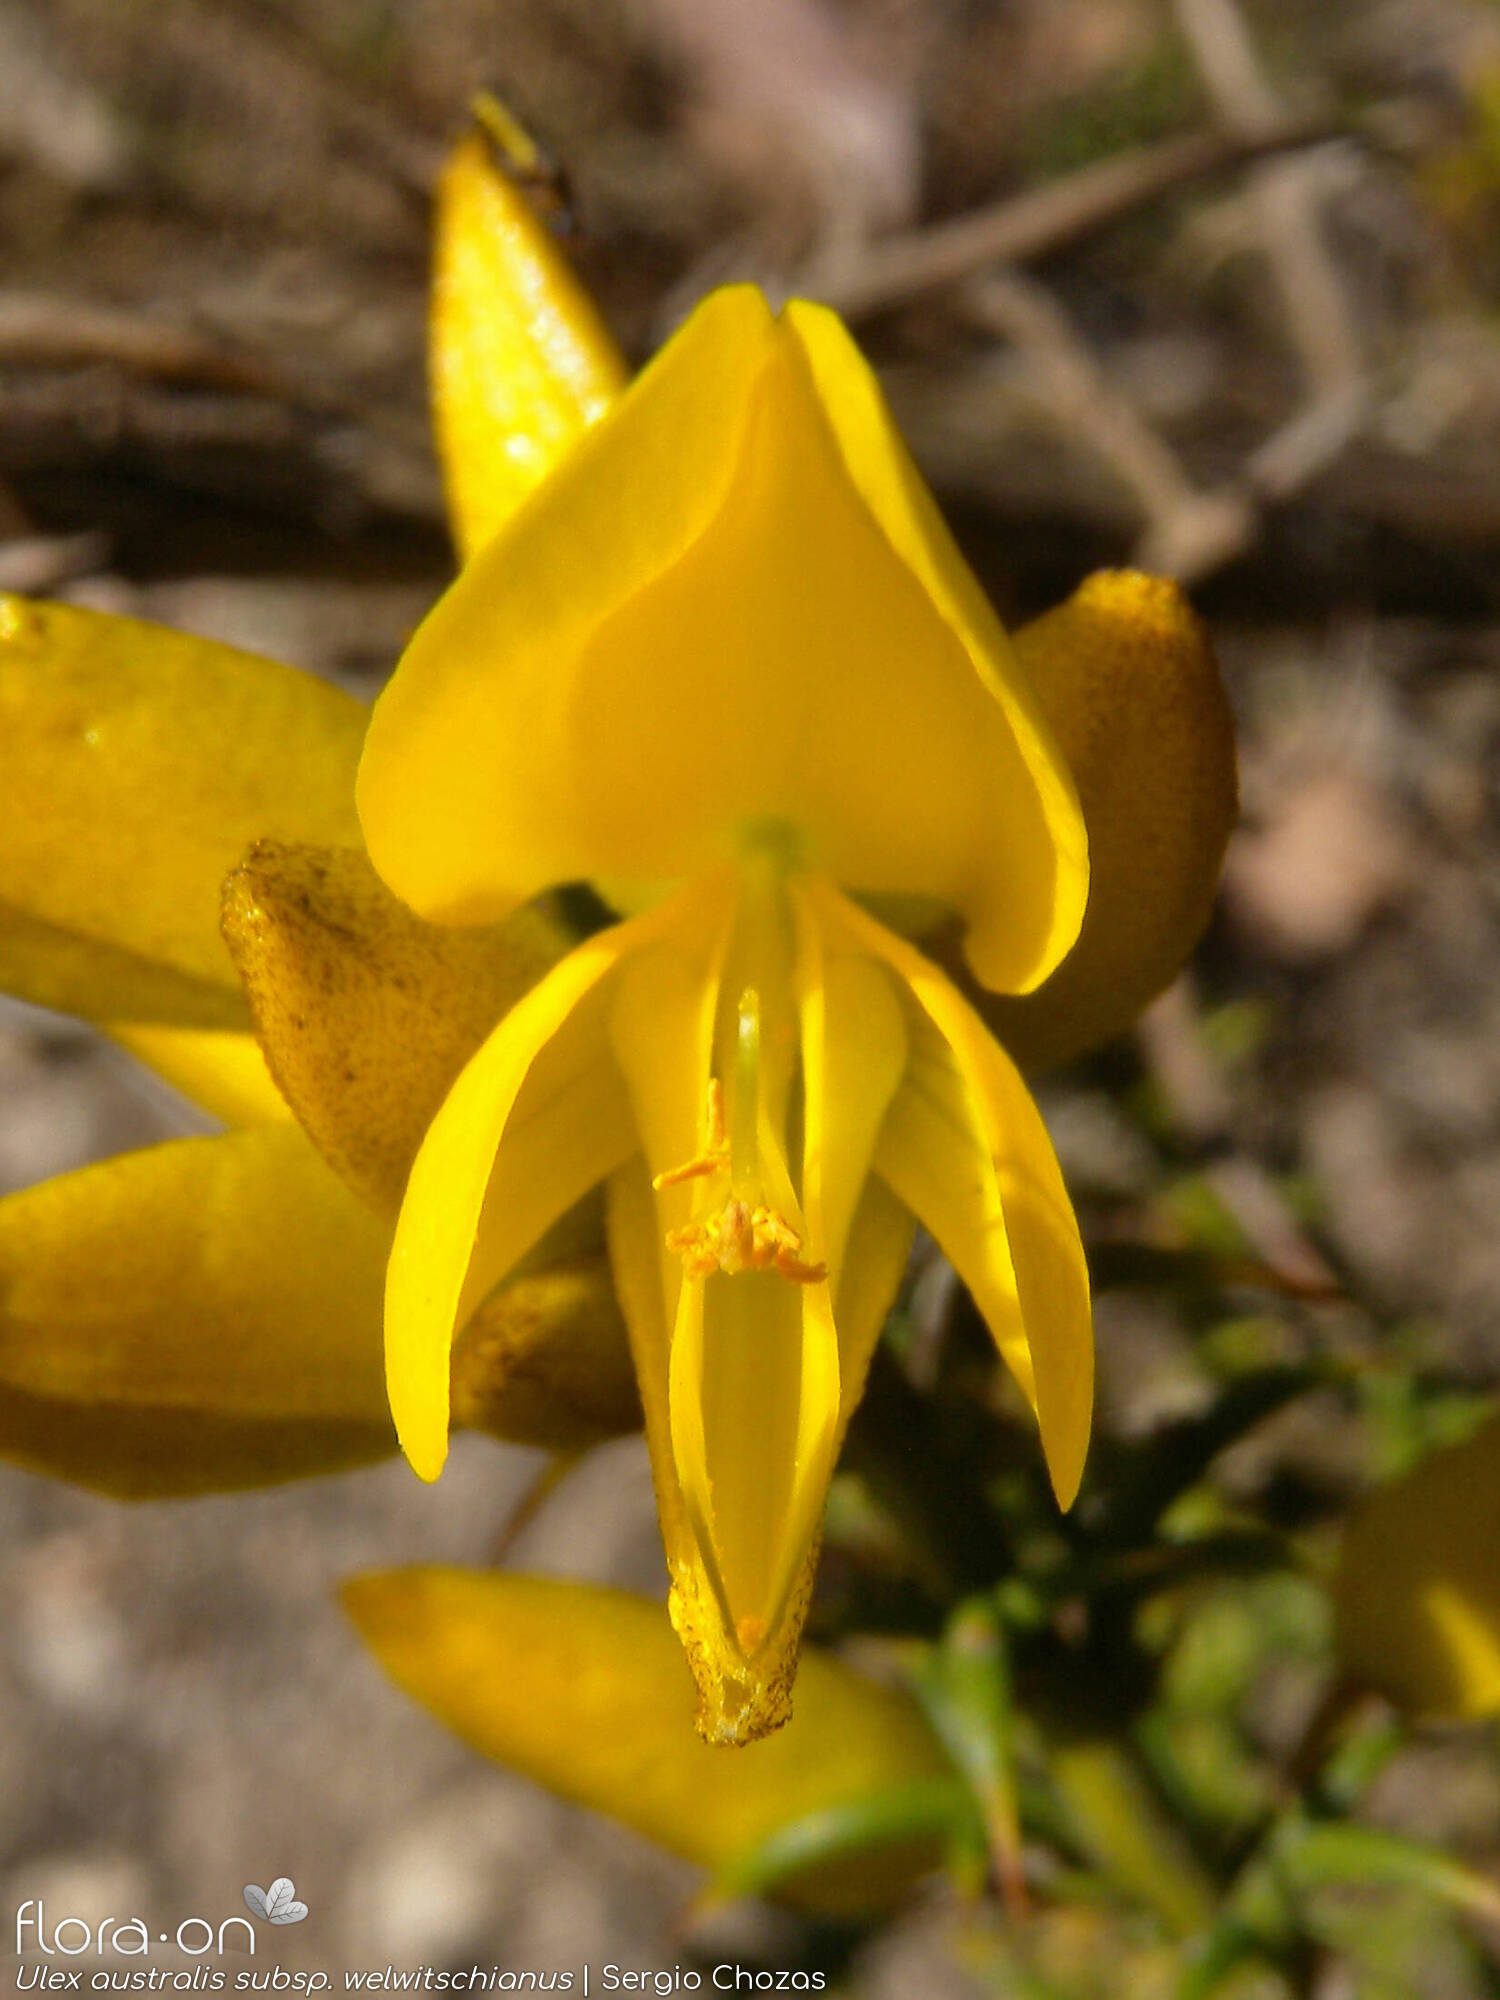 Ulex australis - Flor (close-up) | Sergio Chozas; CC BY-NC 4.0